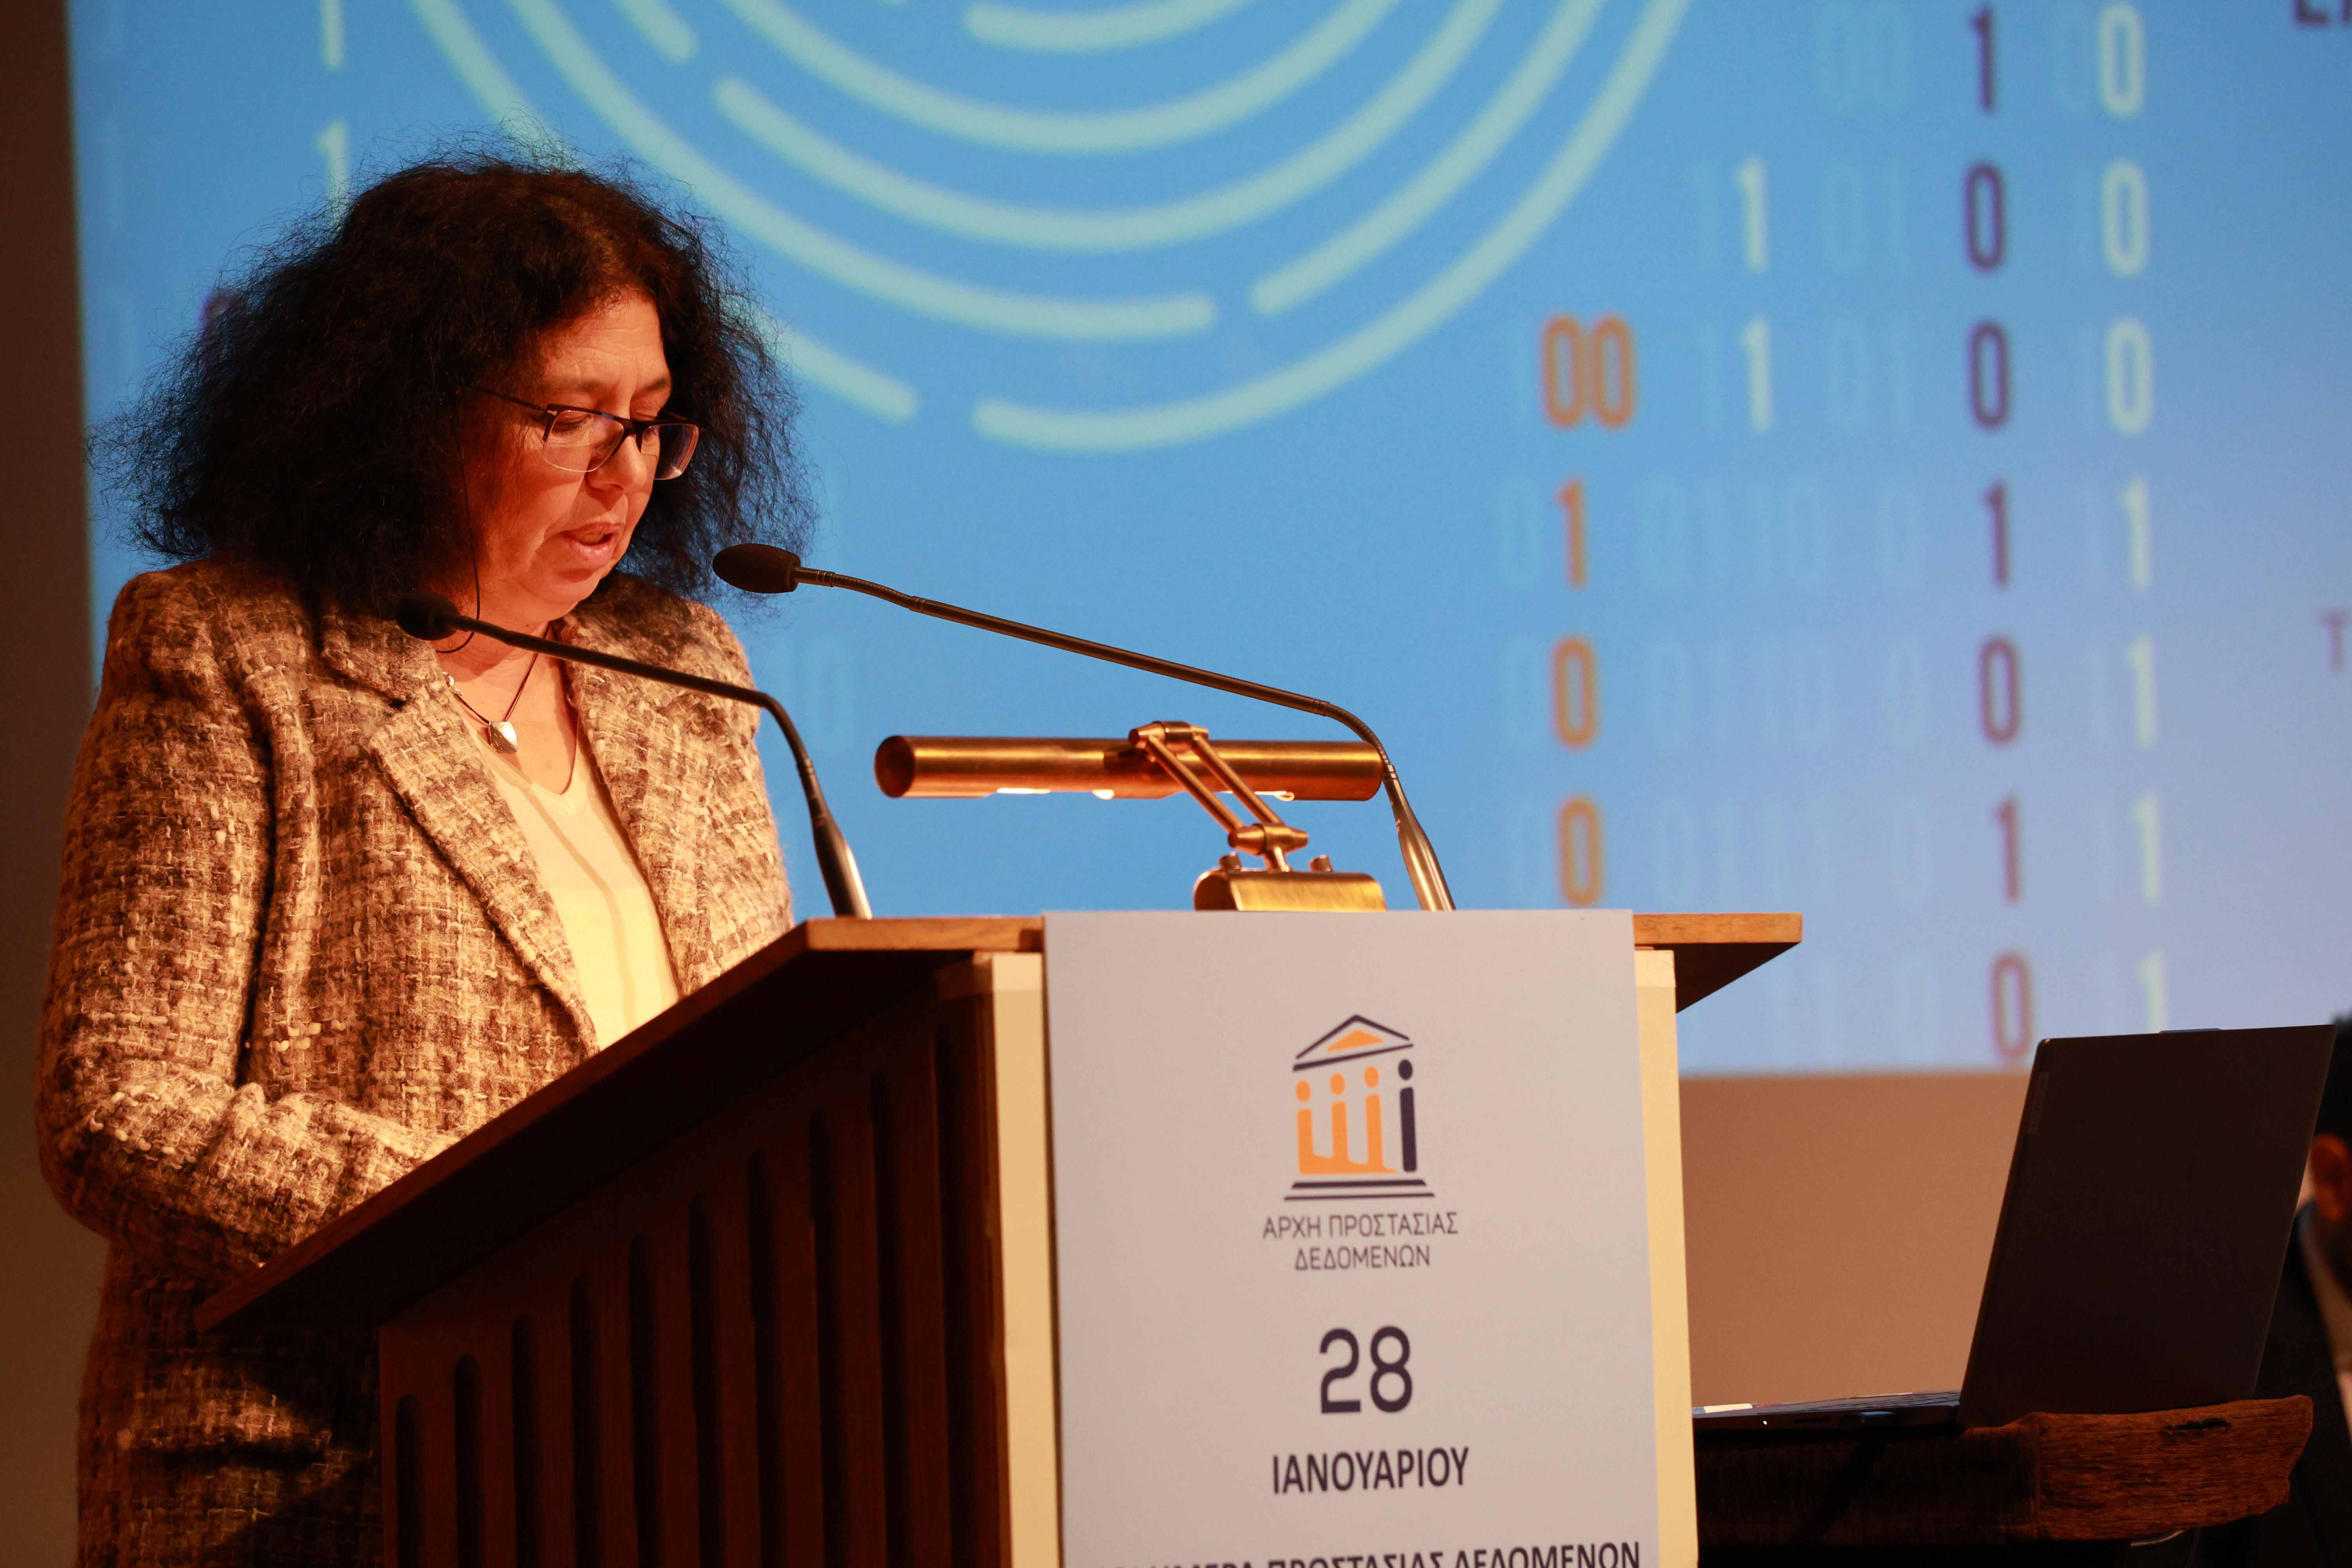 Lilian Mitrou, Professor of the University of the Aegean